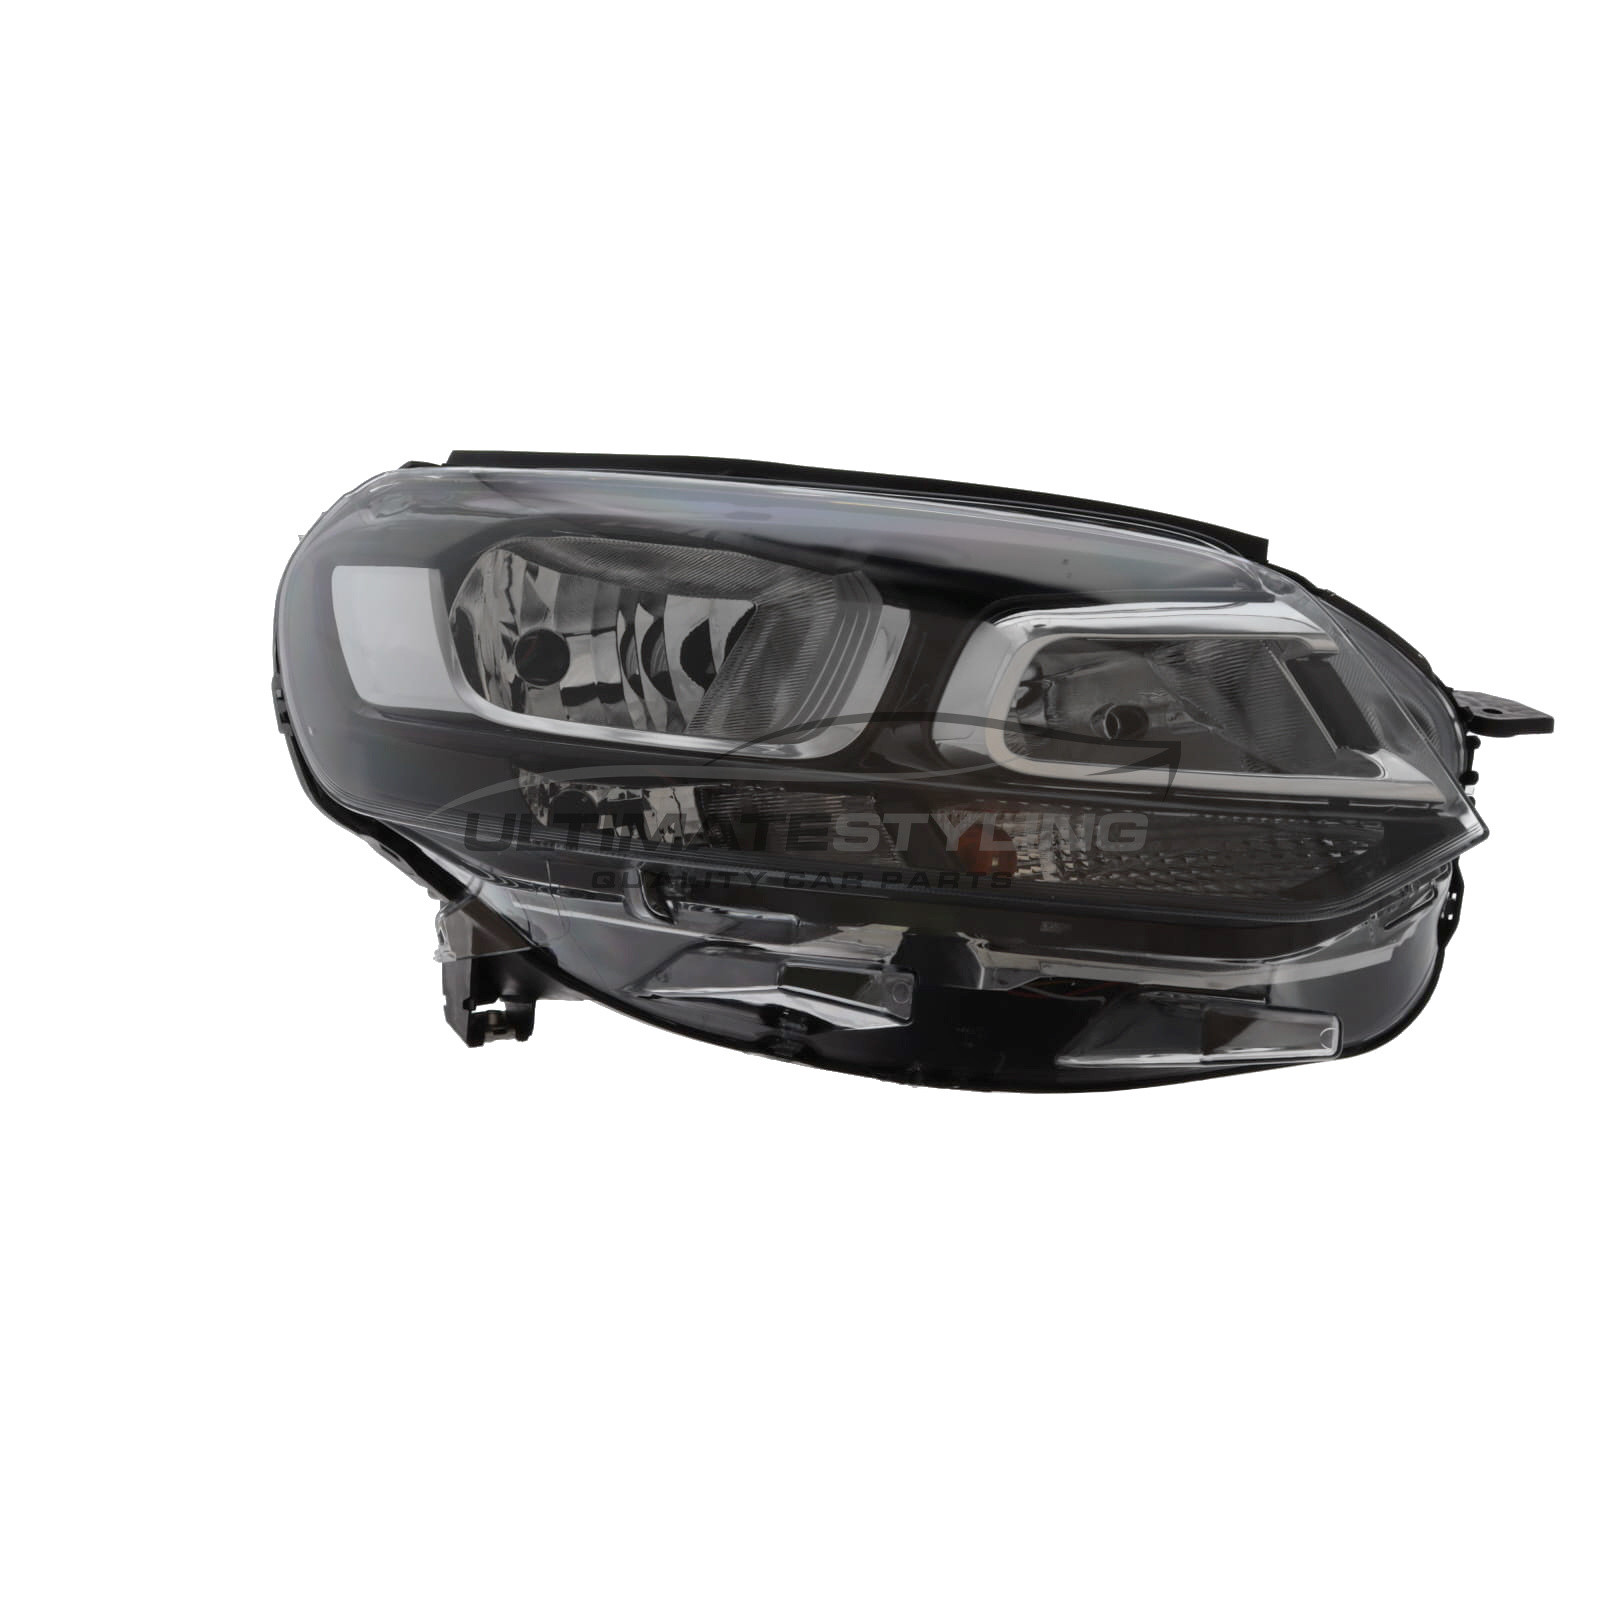 Headlight / Headlamp for Vauxhall Vivaro